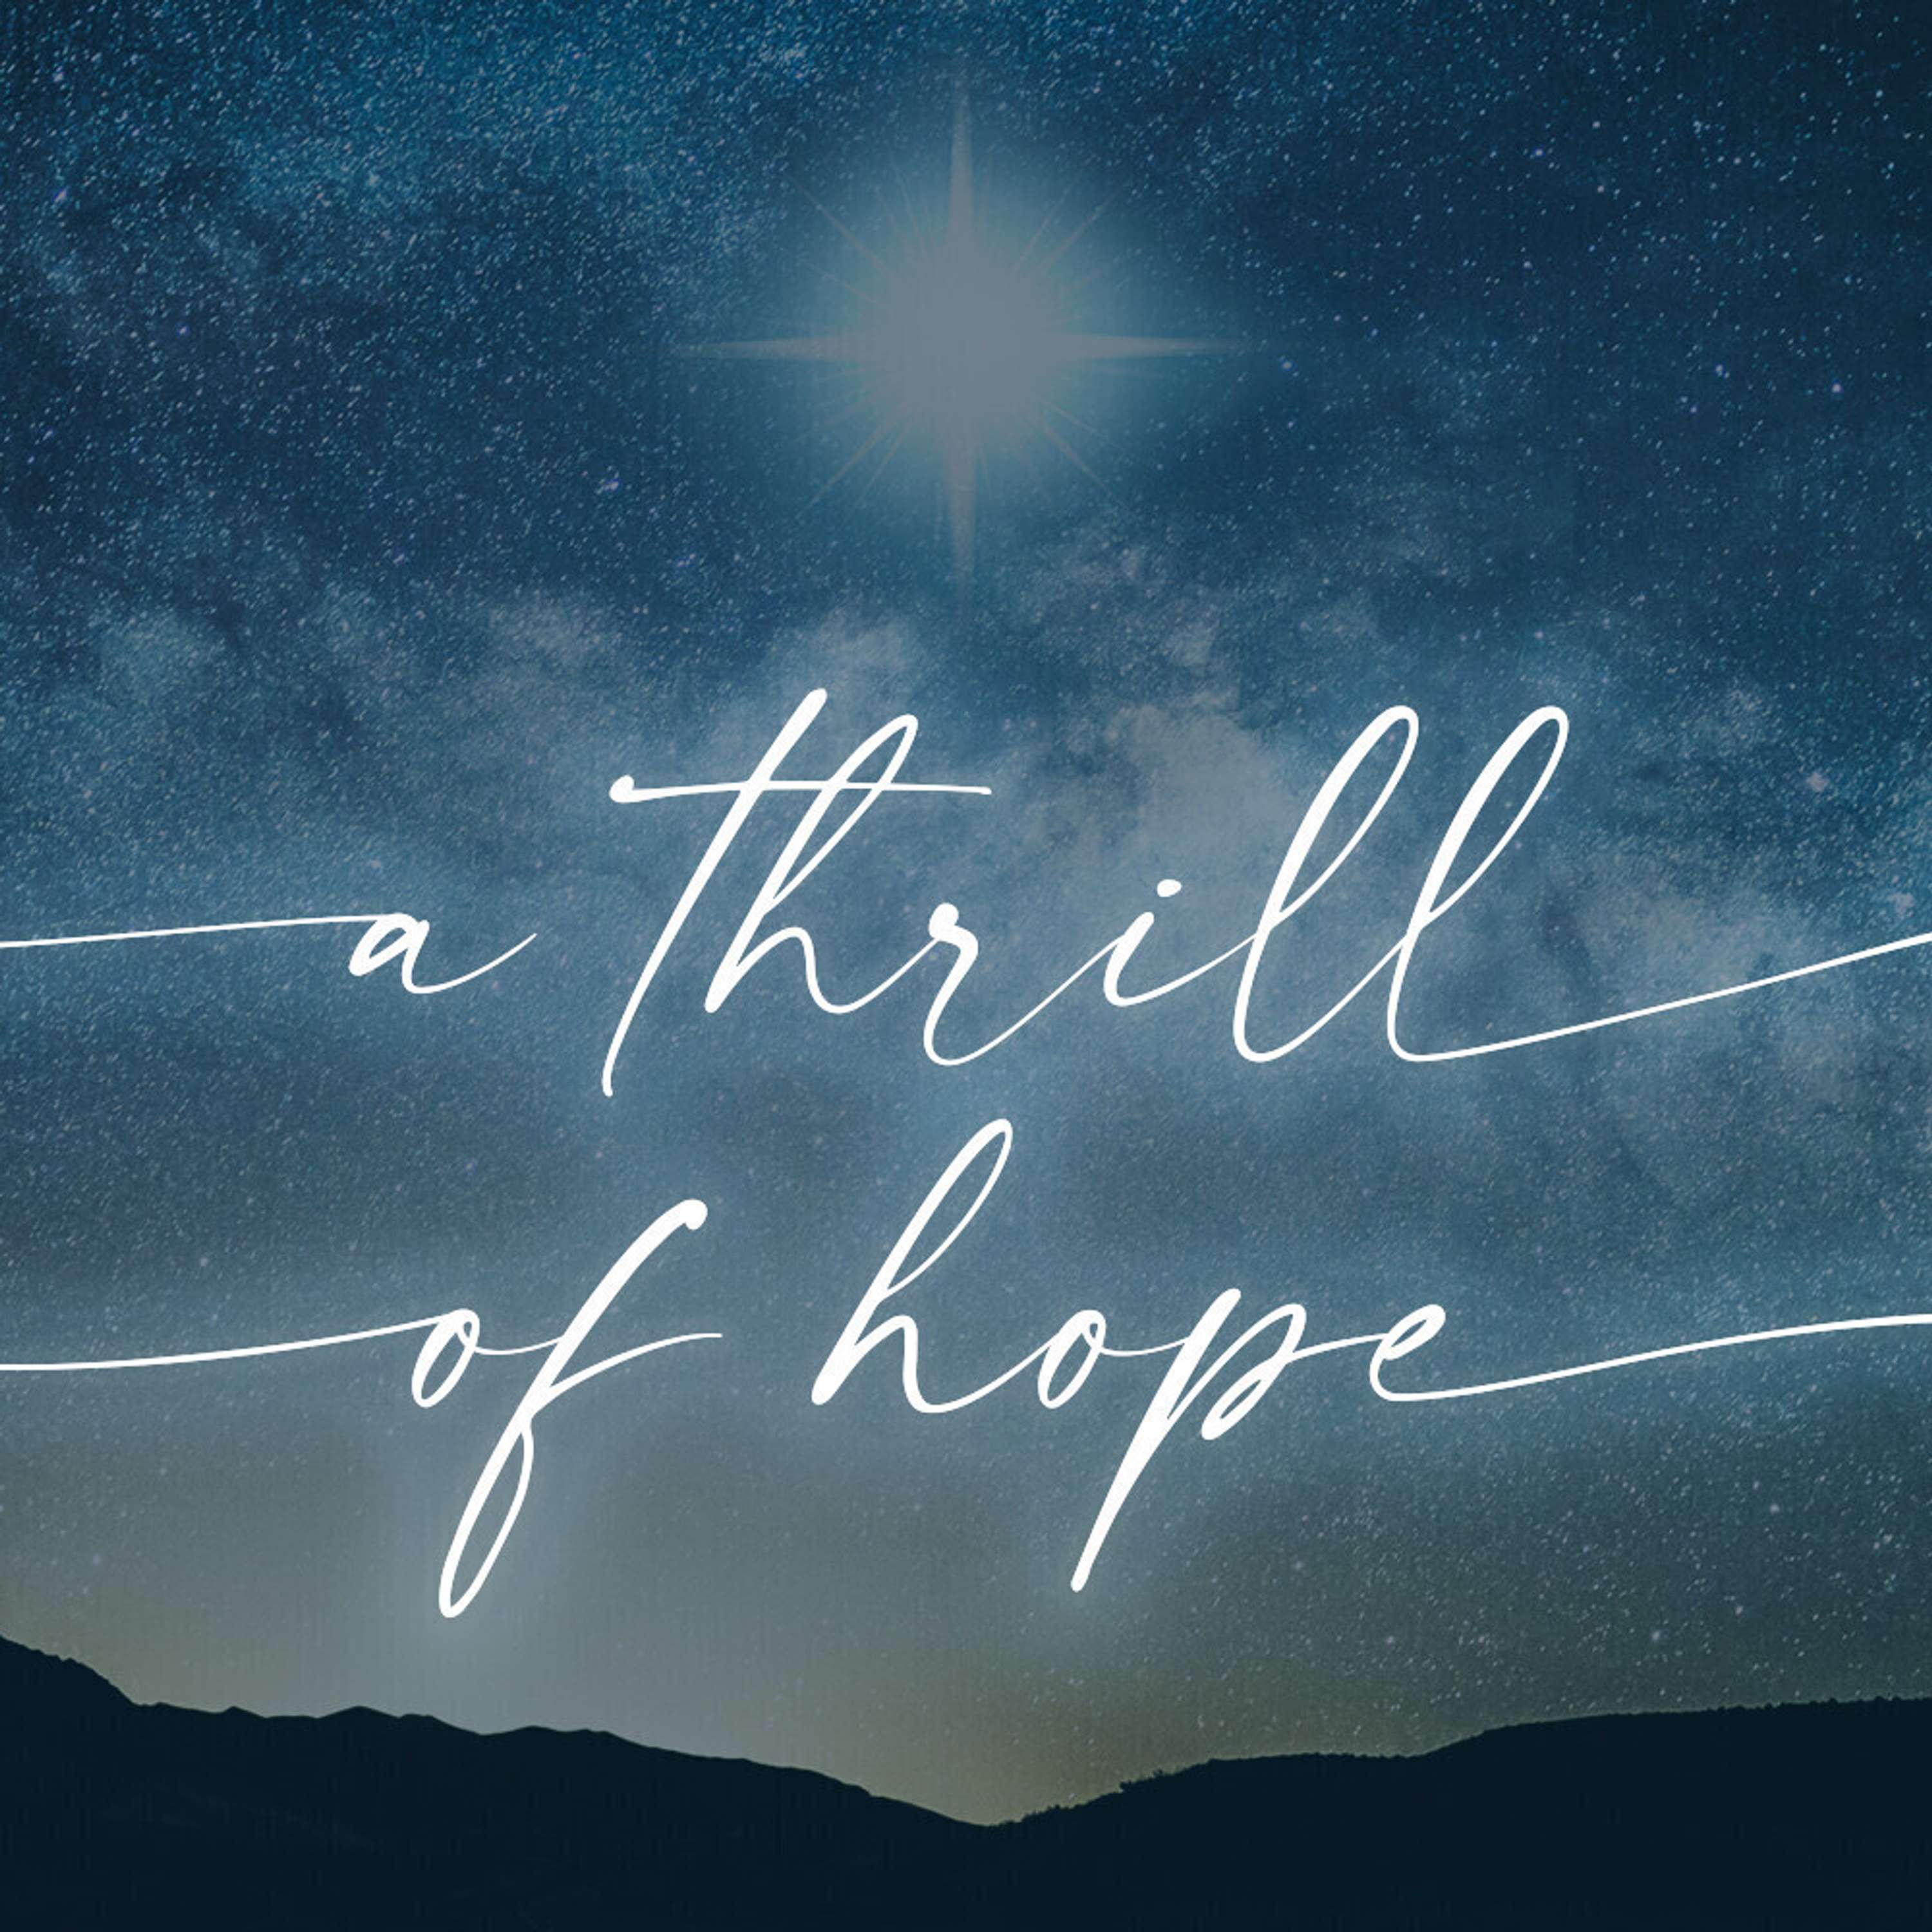 A Persevering Hope (Luke 2)